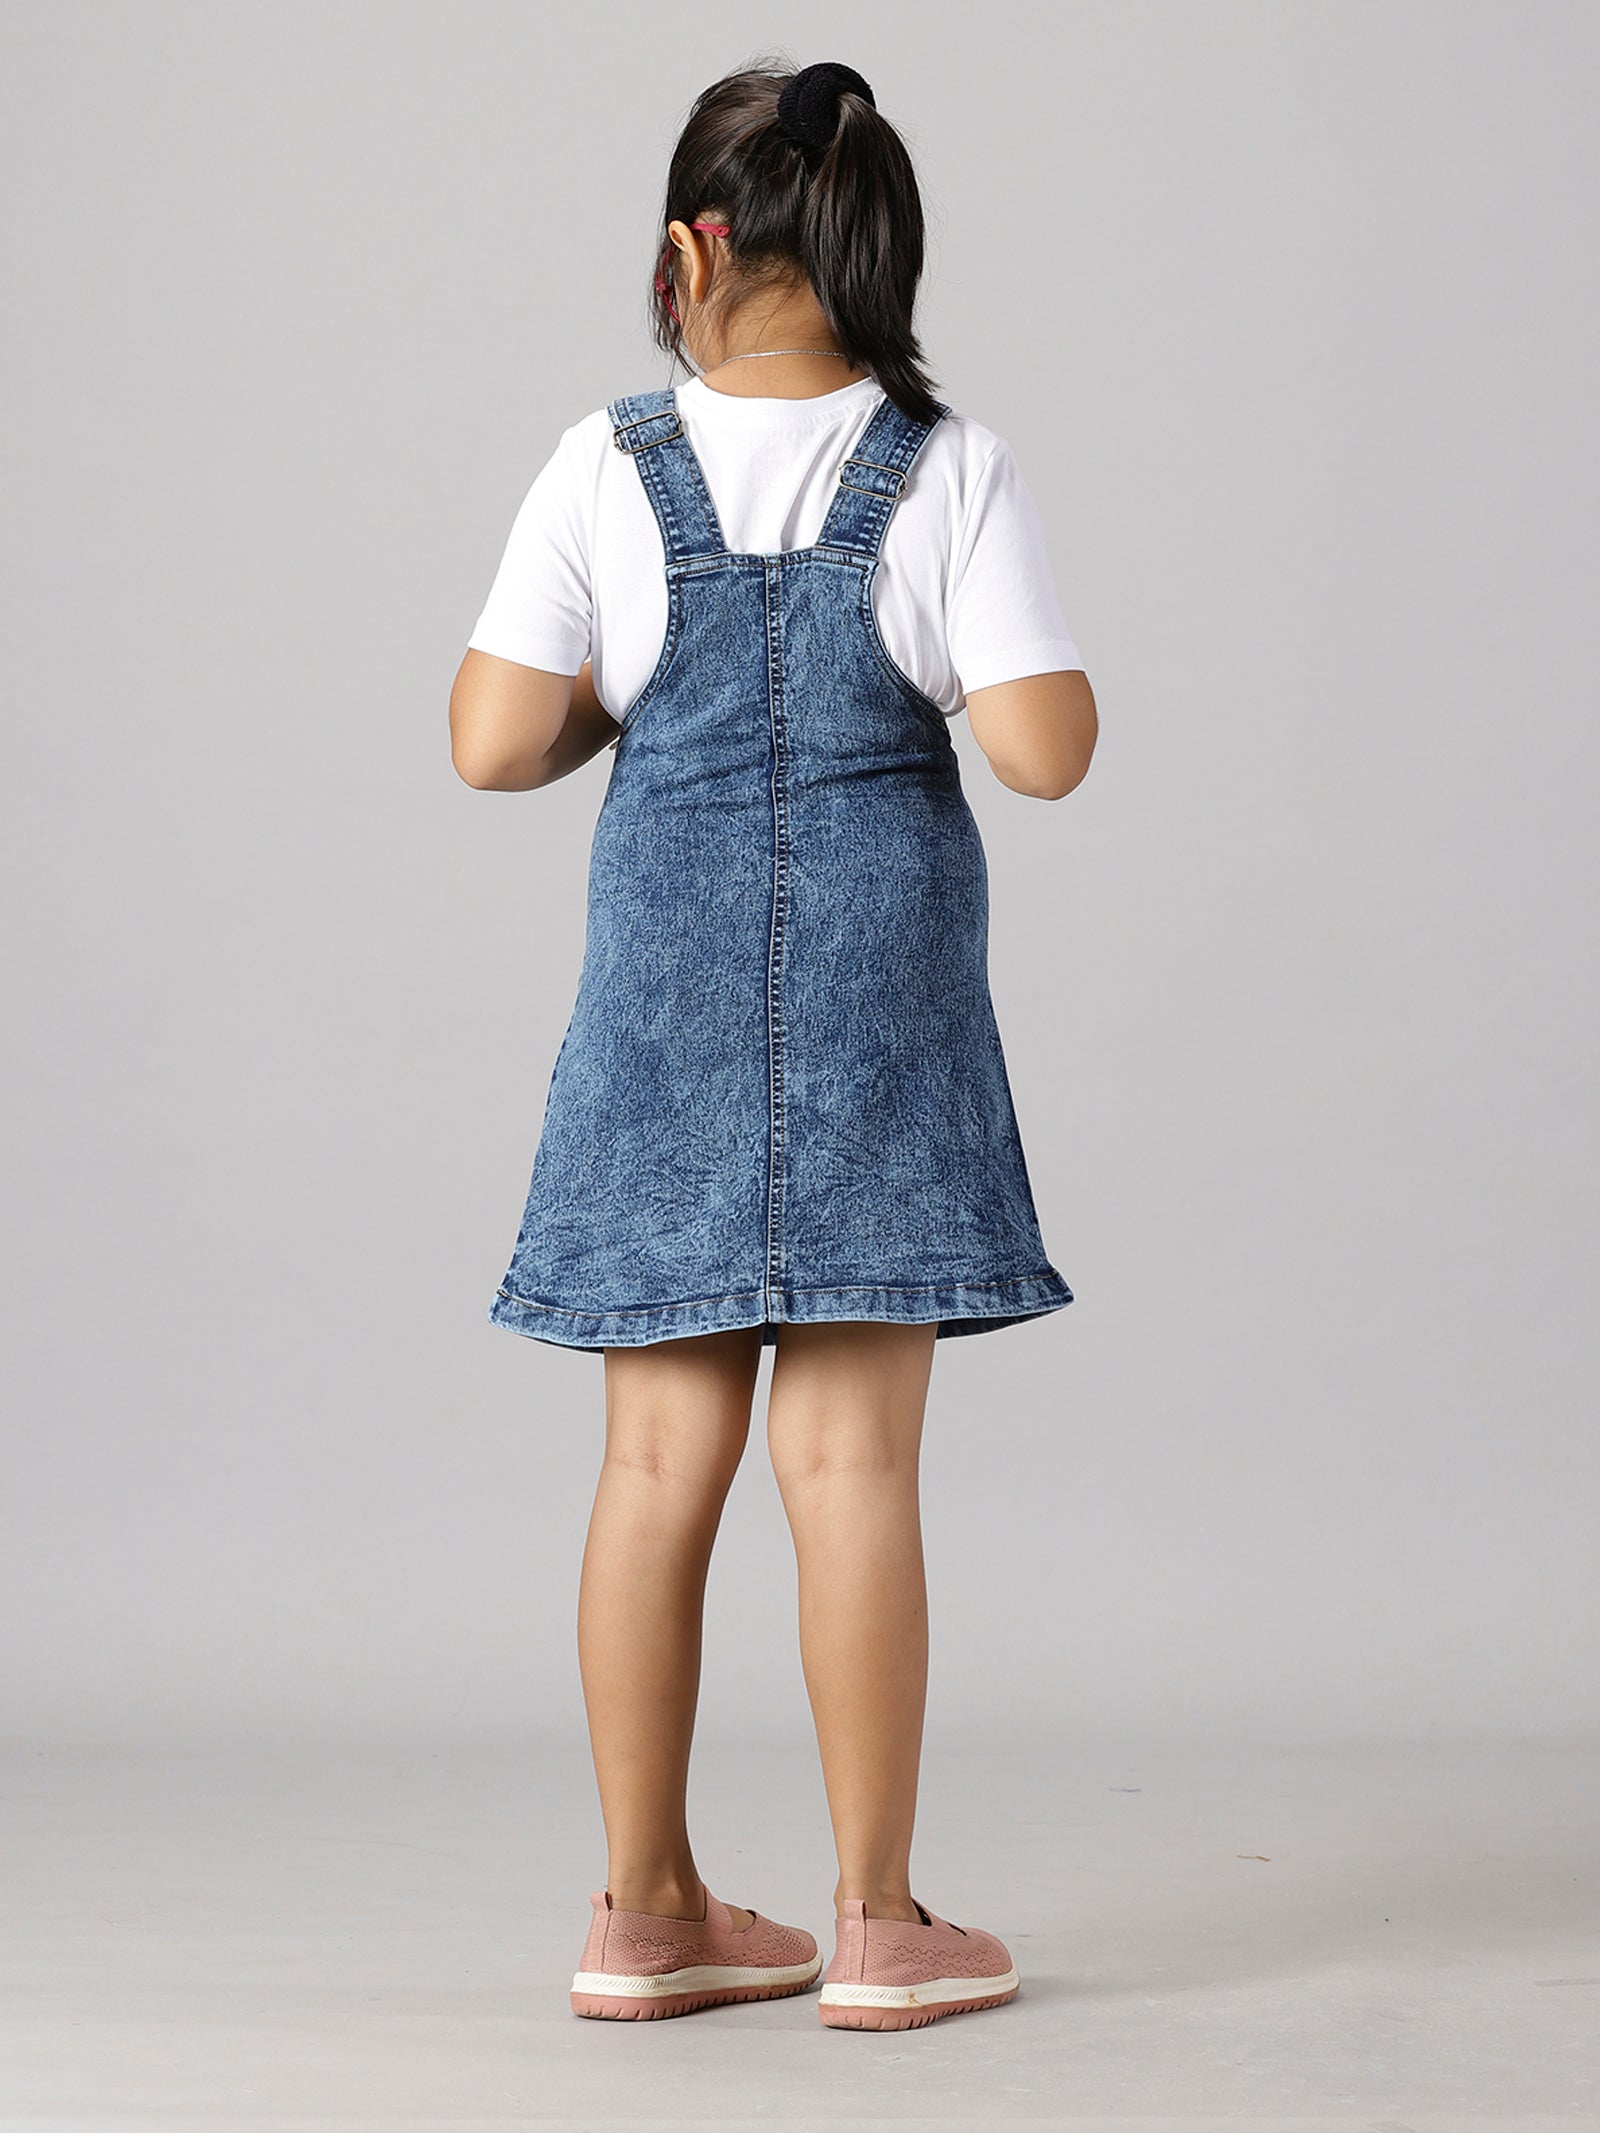 Dungaree dress Skirt Stretch Denim Blue Girls Age 8 10 12 14 16 Years